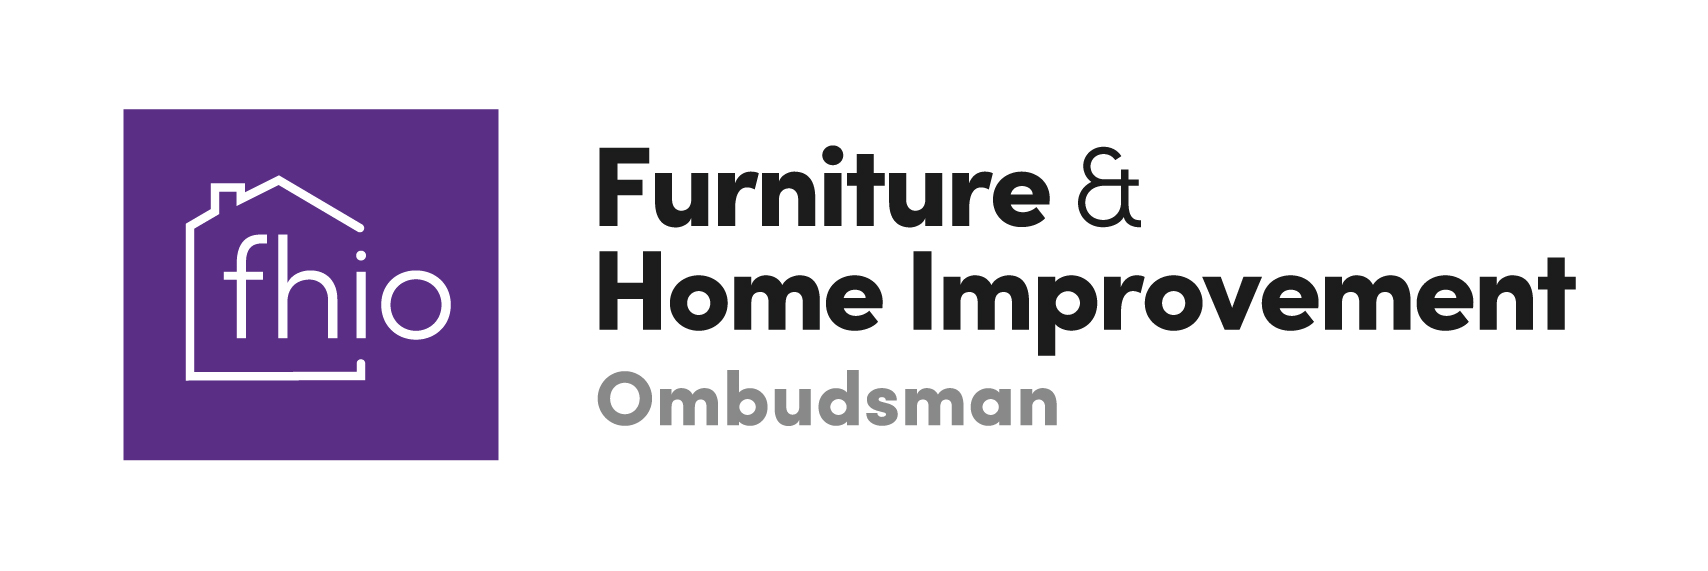 Furniture Ombudsman